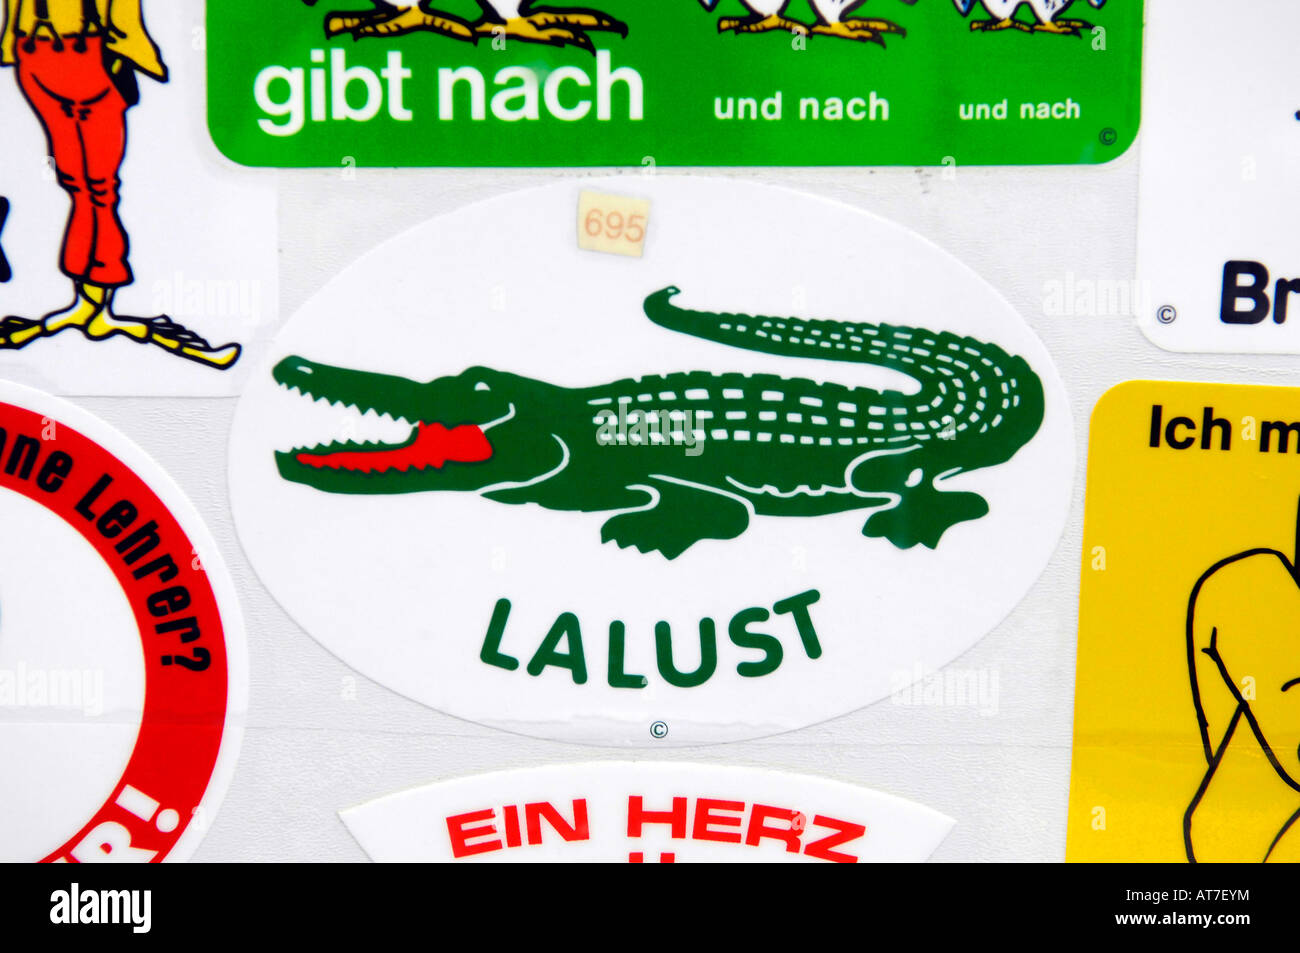 lalust lacoste crocodile comic humour retro souvenir sticker badge berlin  germany europe travel tourism Stock Photo - Alamy